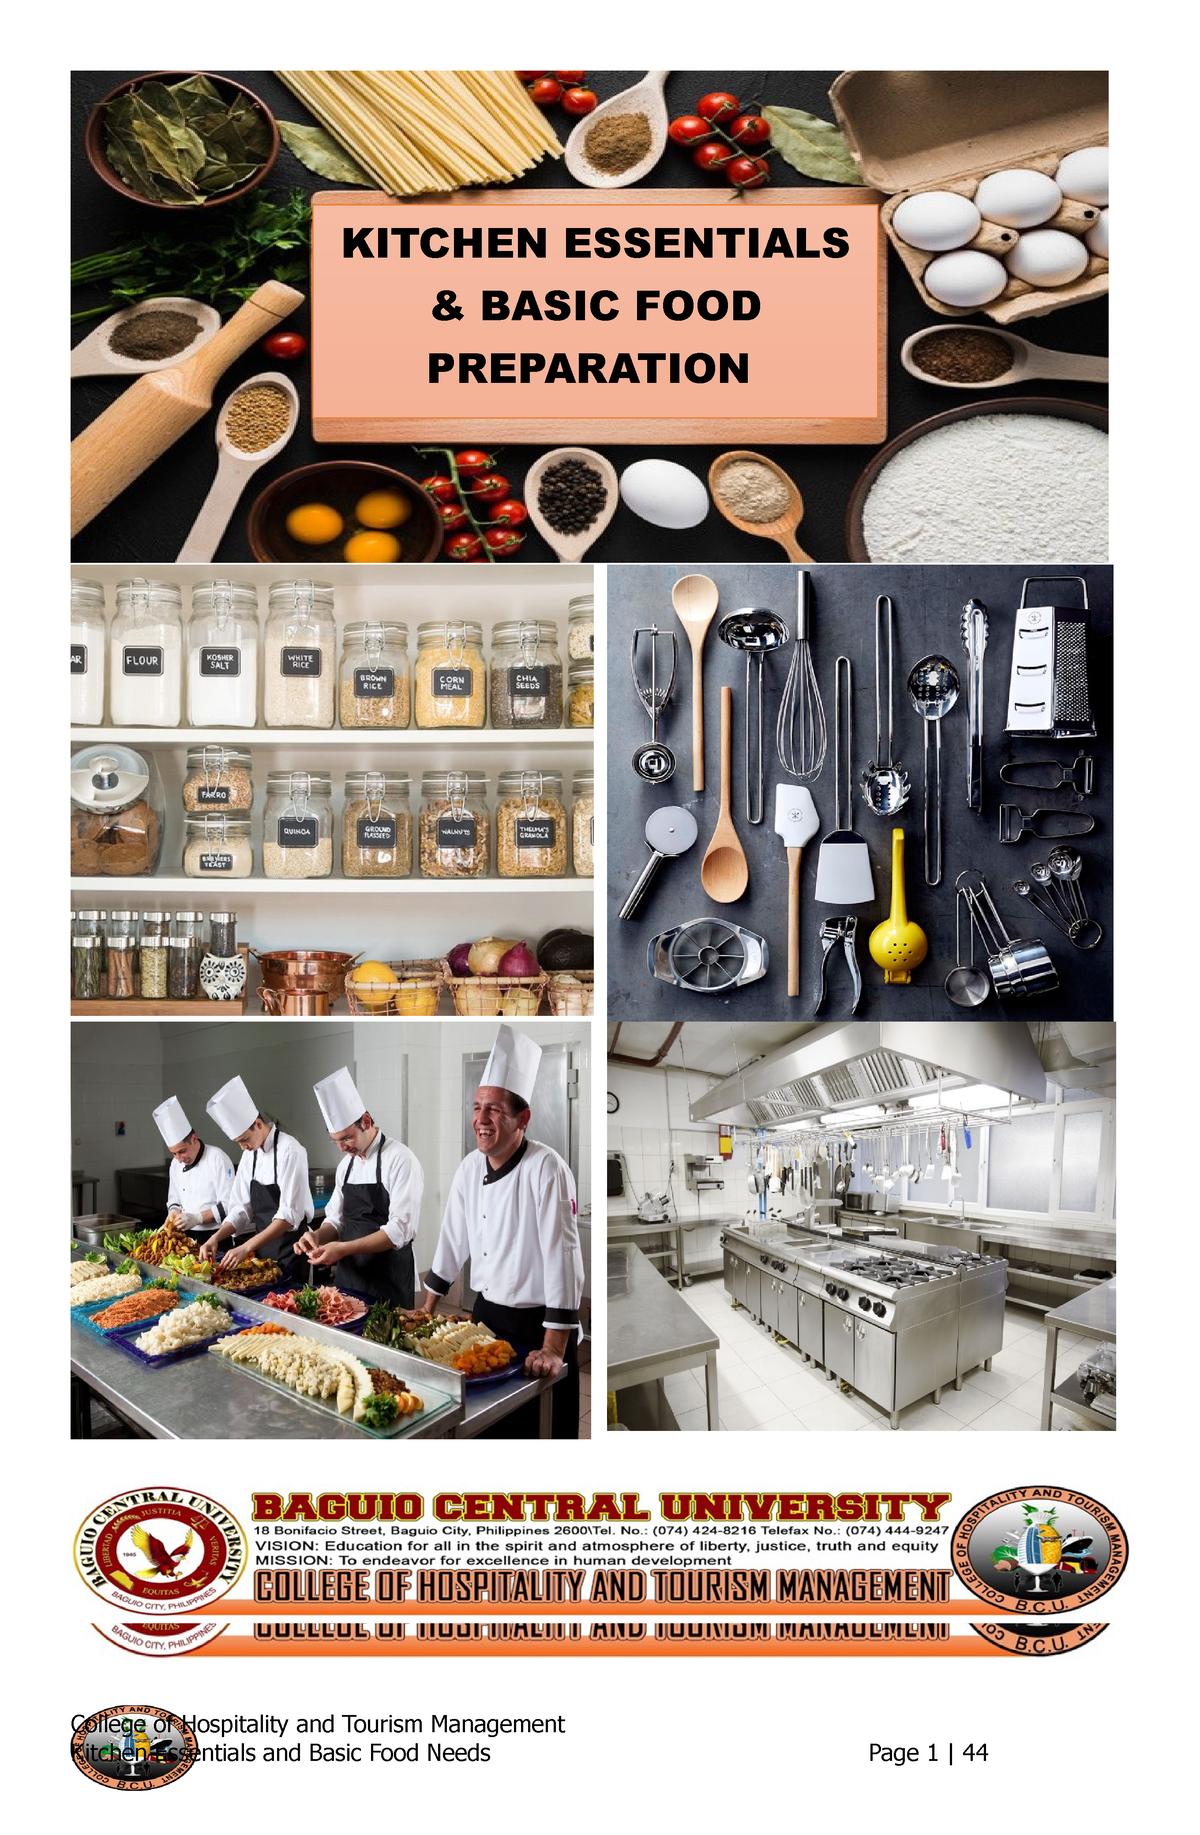 Summary of Kitchen Essentials and Basic Food Preparation